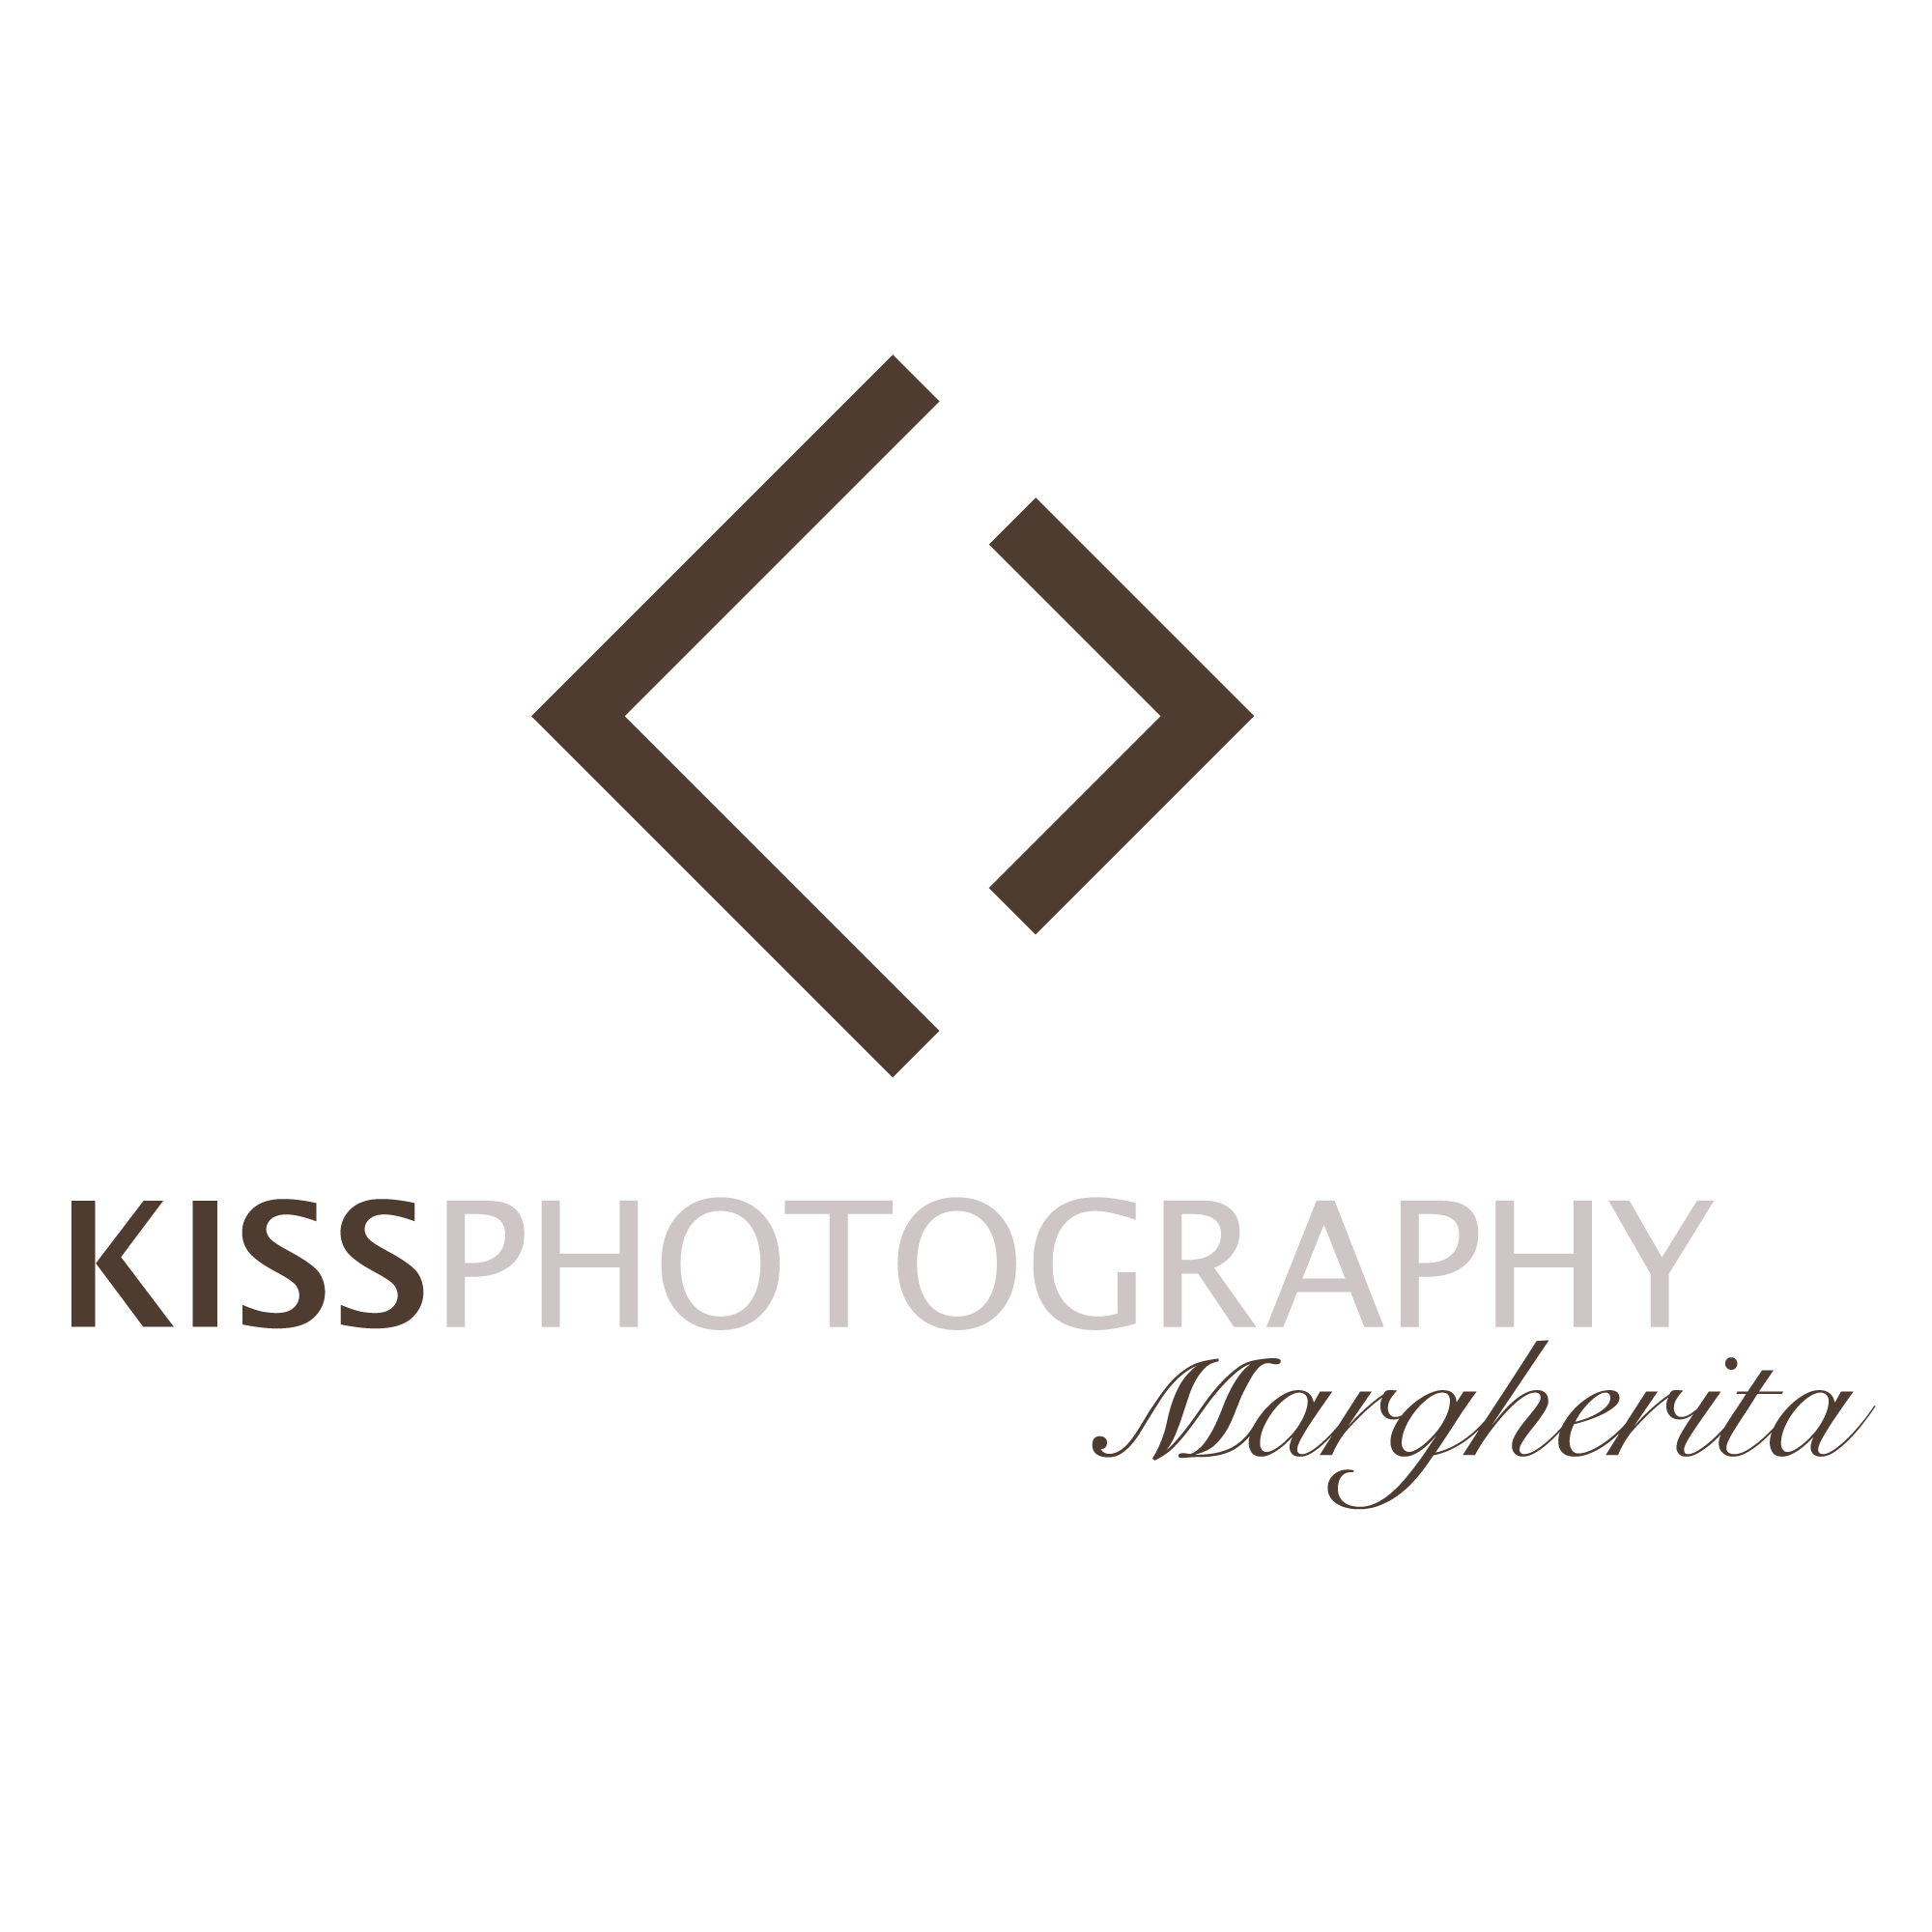 Kiss photography logo